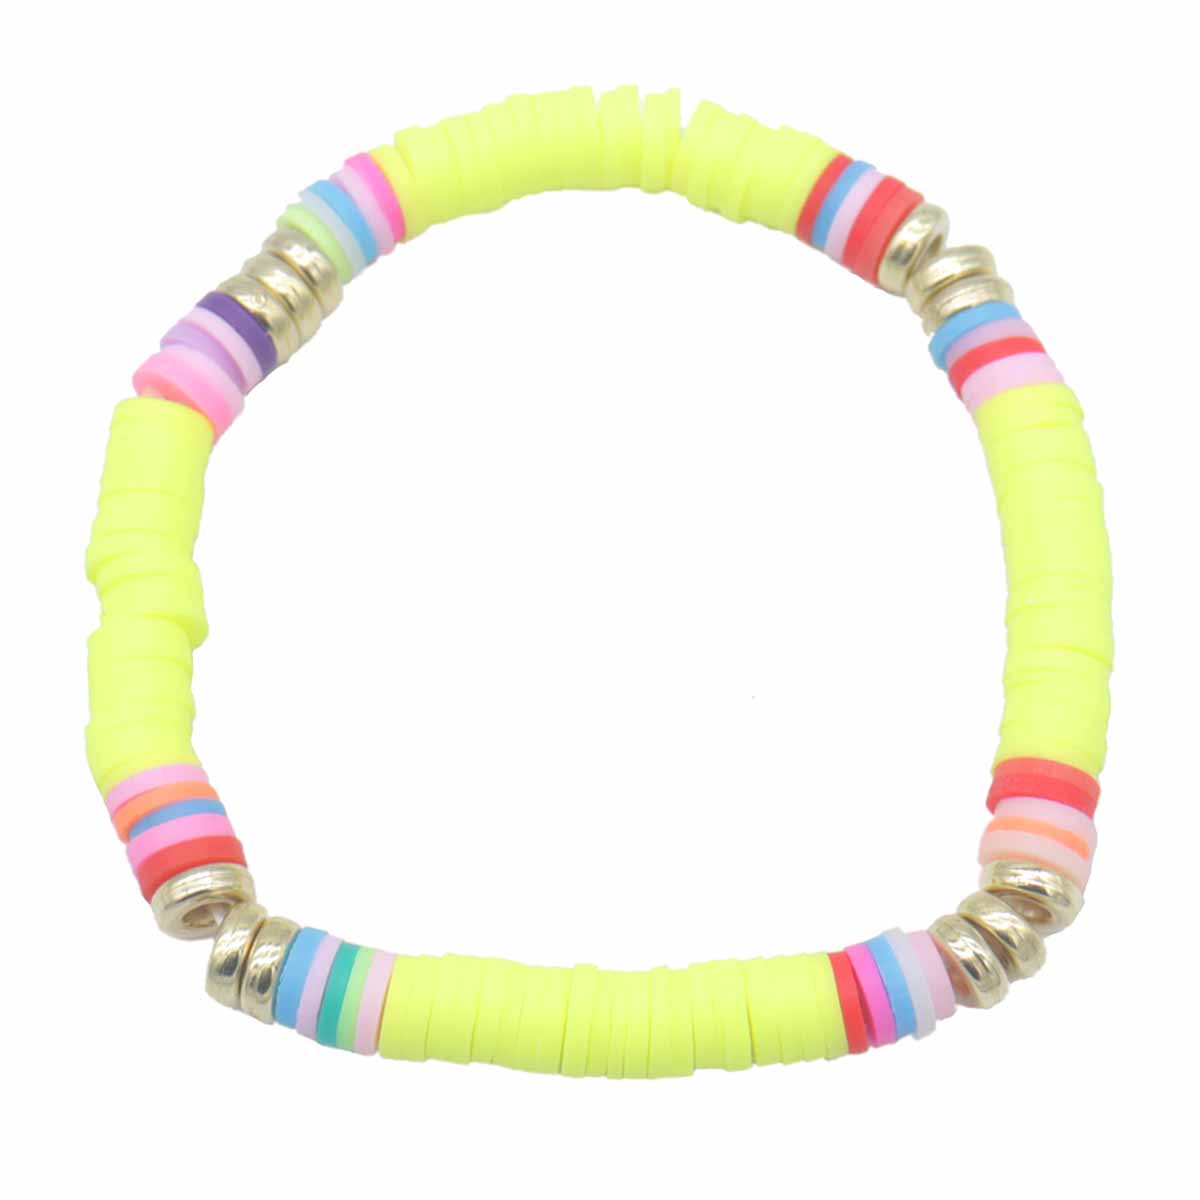 F-E20.1 B2375-060-1 Bracelet for Kids Yellow